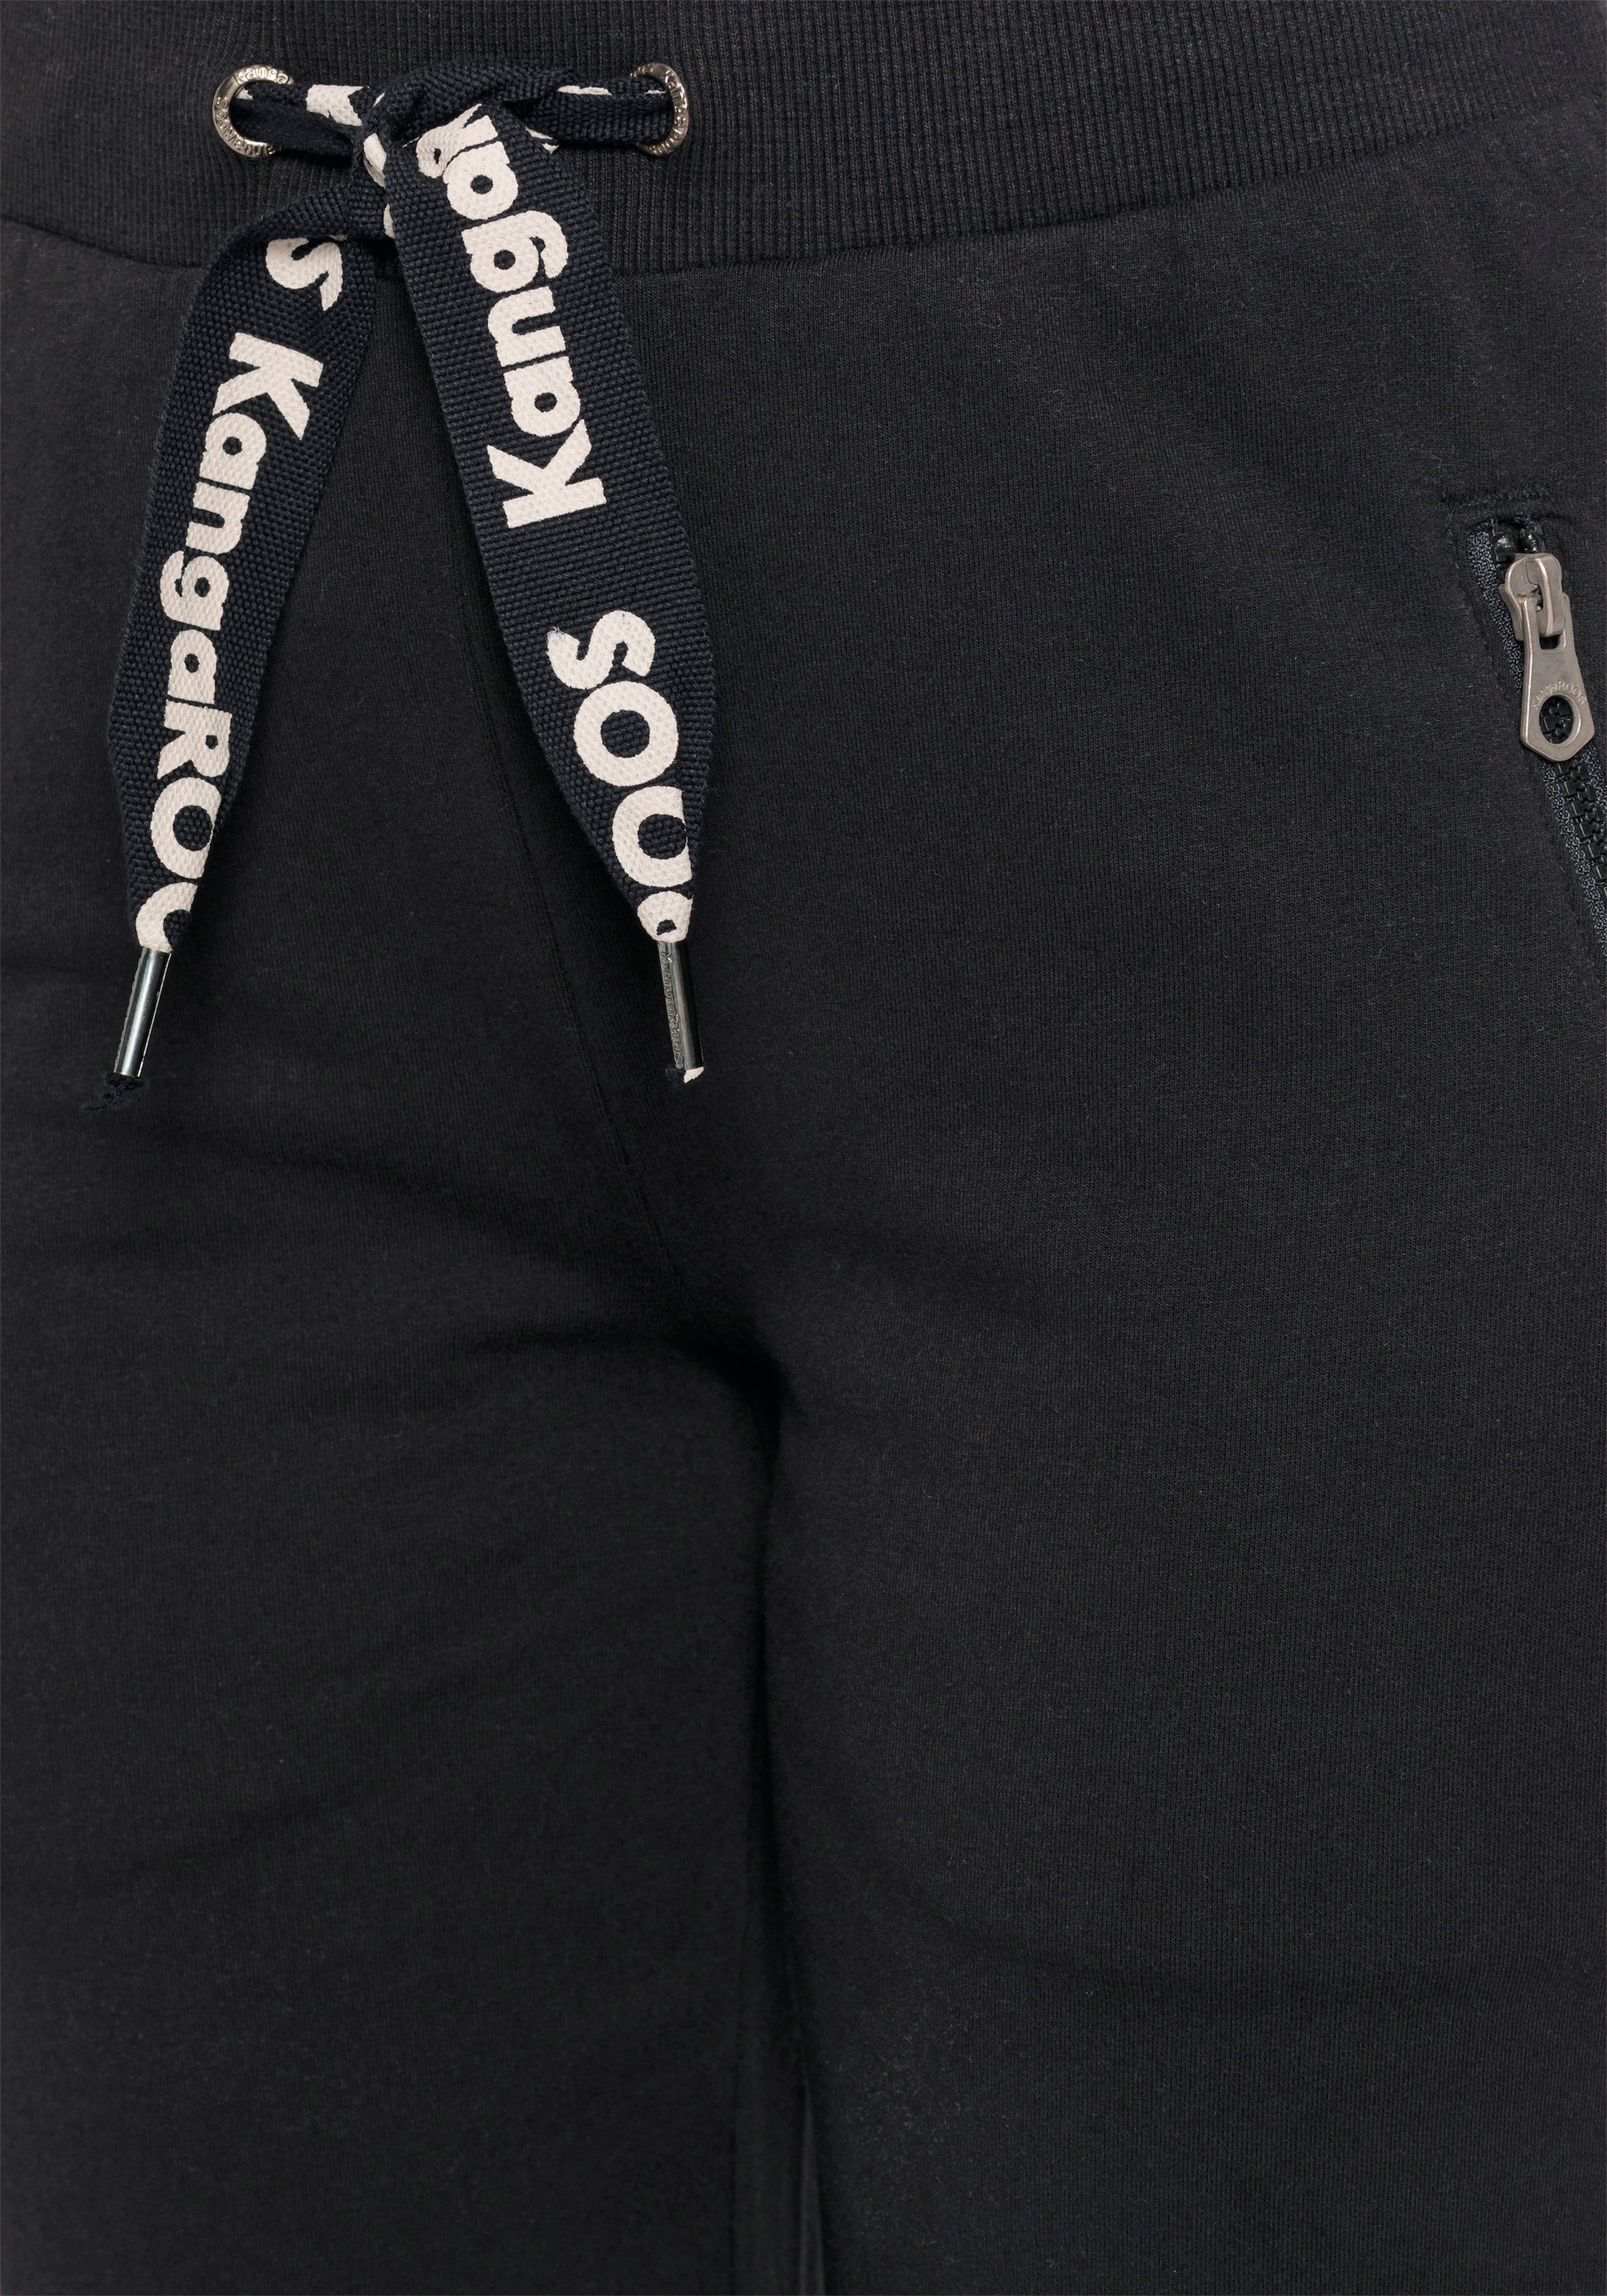 KangaROOS Jogger Pants, Sweatpants mit bestellen KOLLEKTION String -NEUE Logo und Zippertaschen